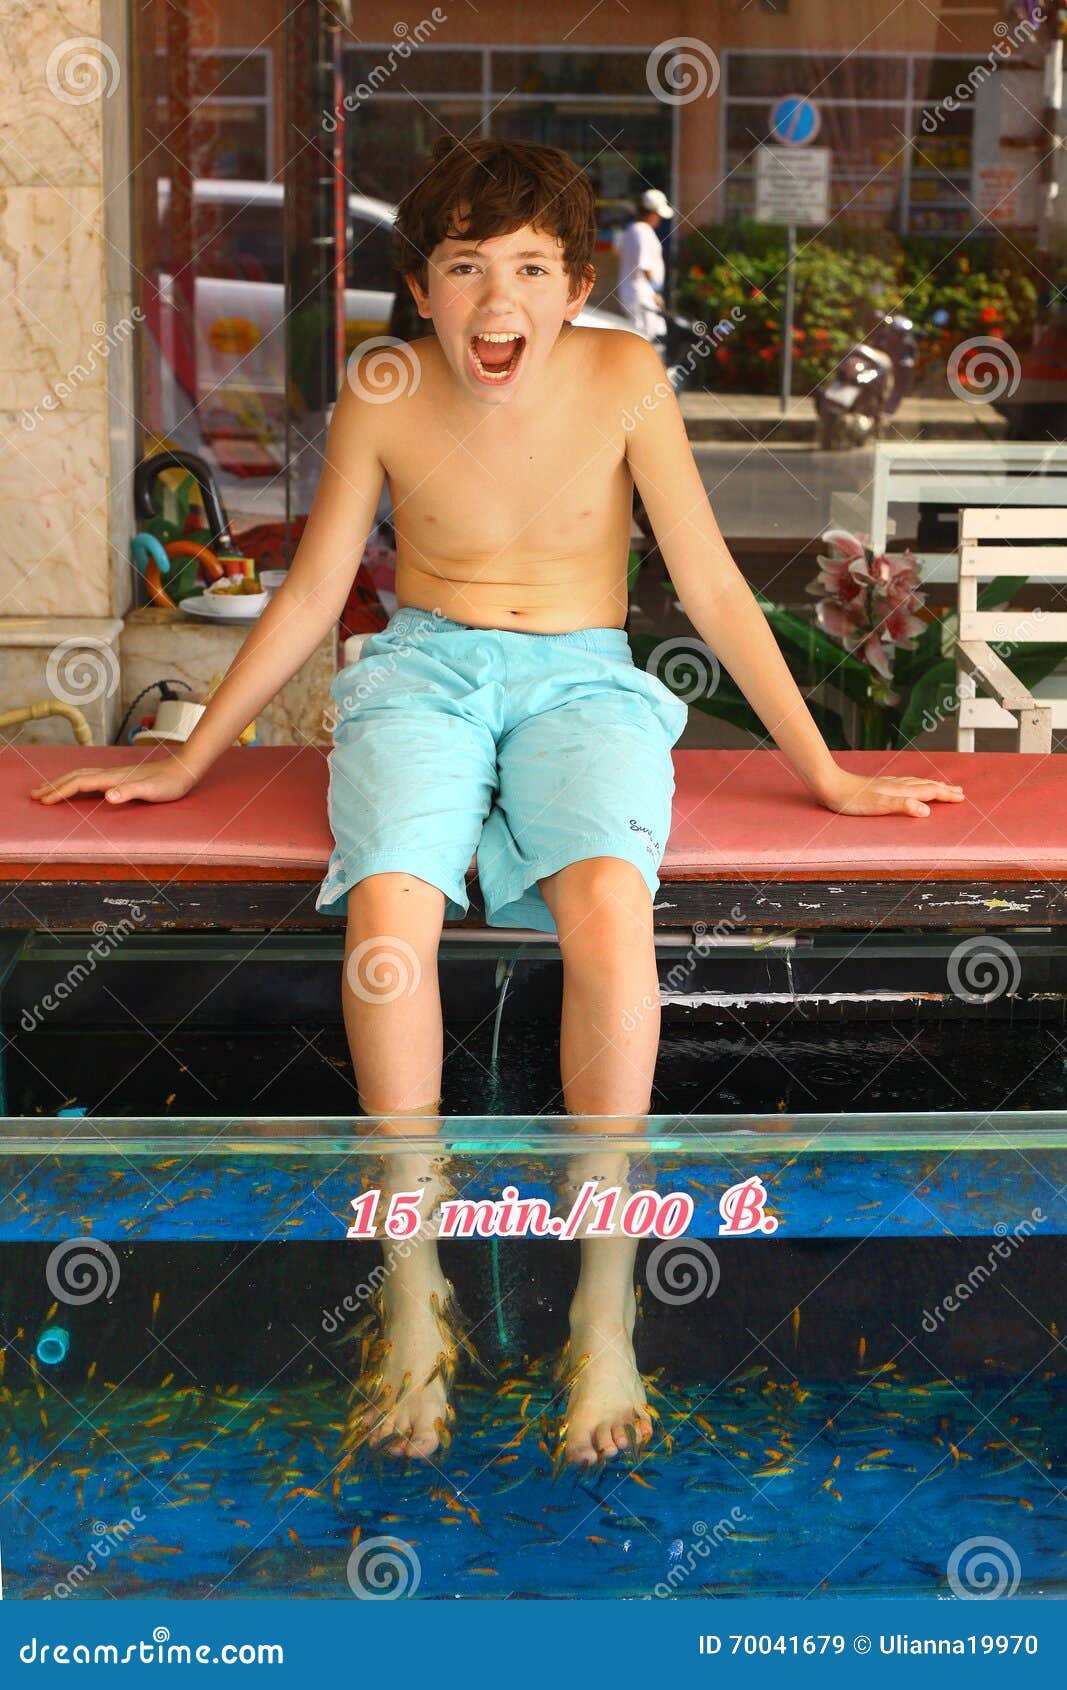 Boy Undergo Fish Pedicure Procedure Stock Image - Image of female, green:  70041679